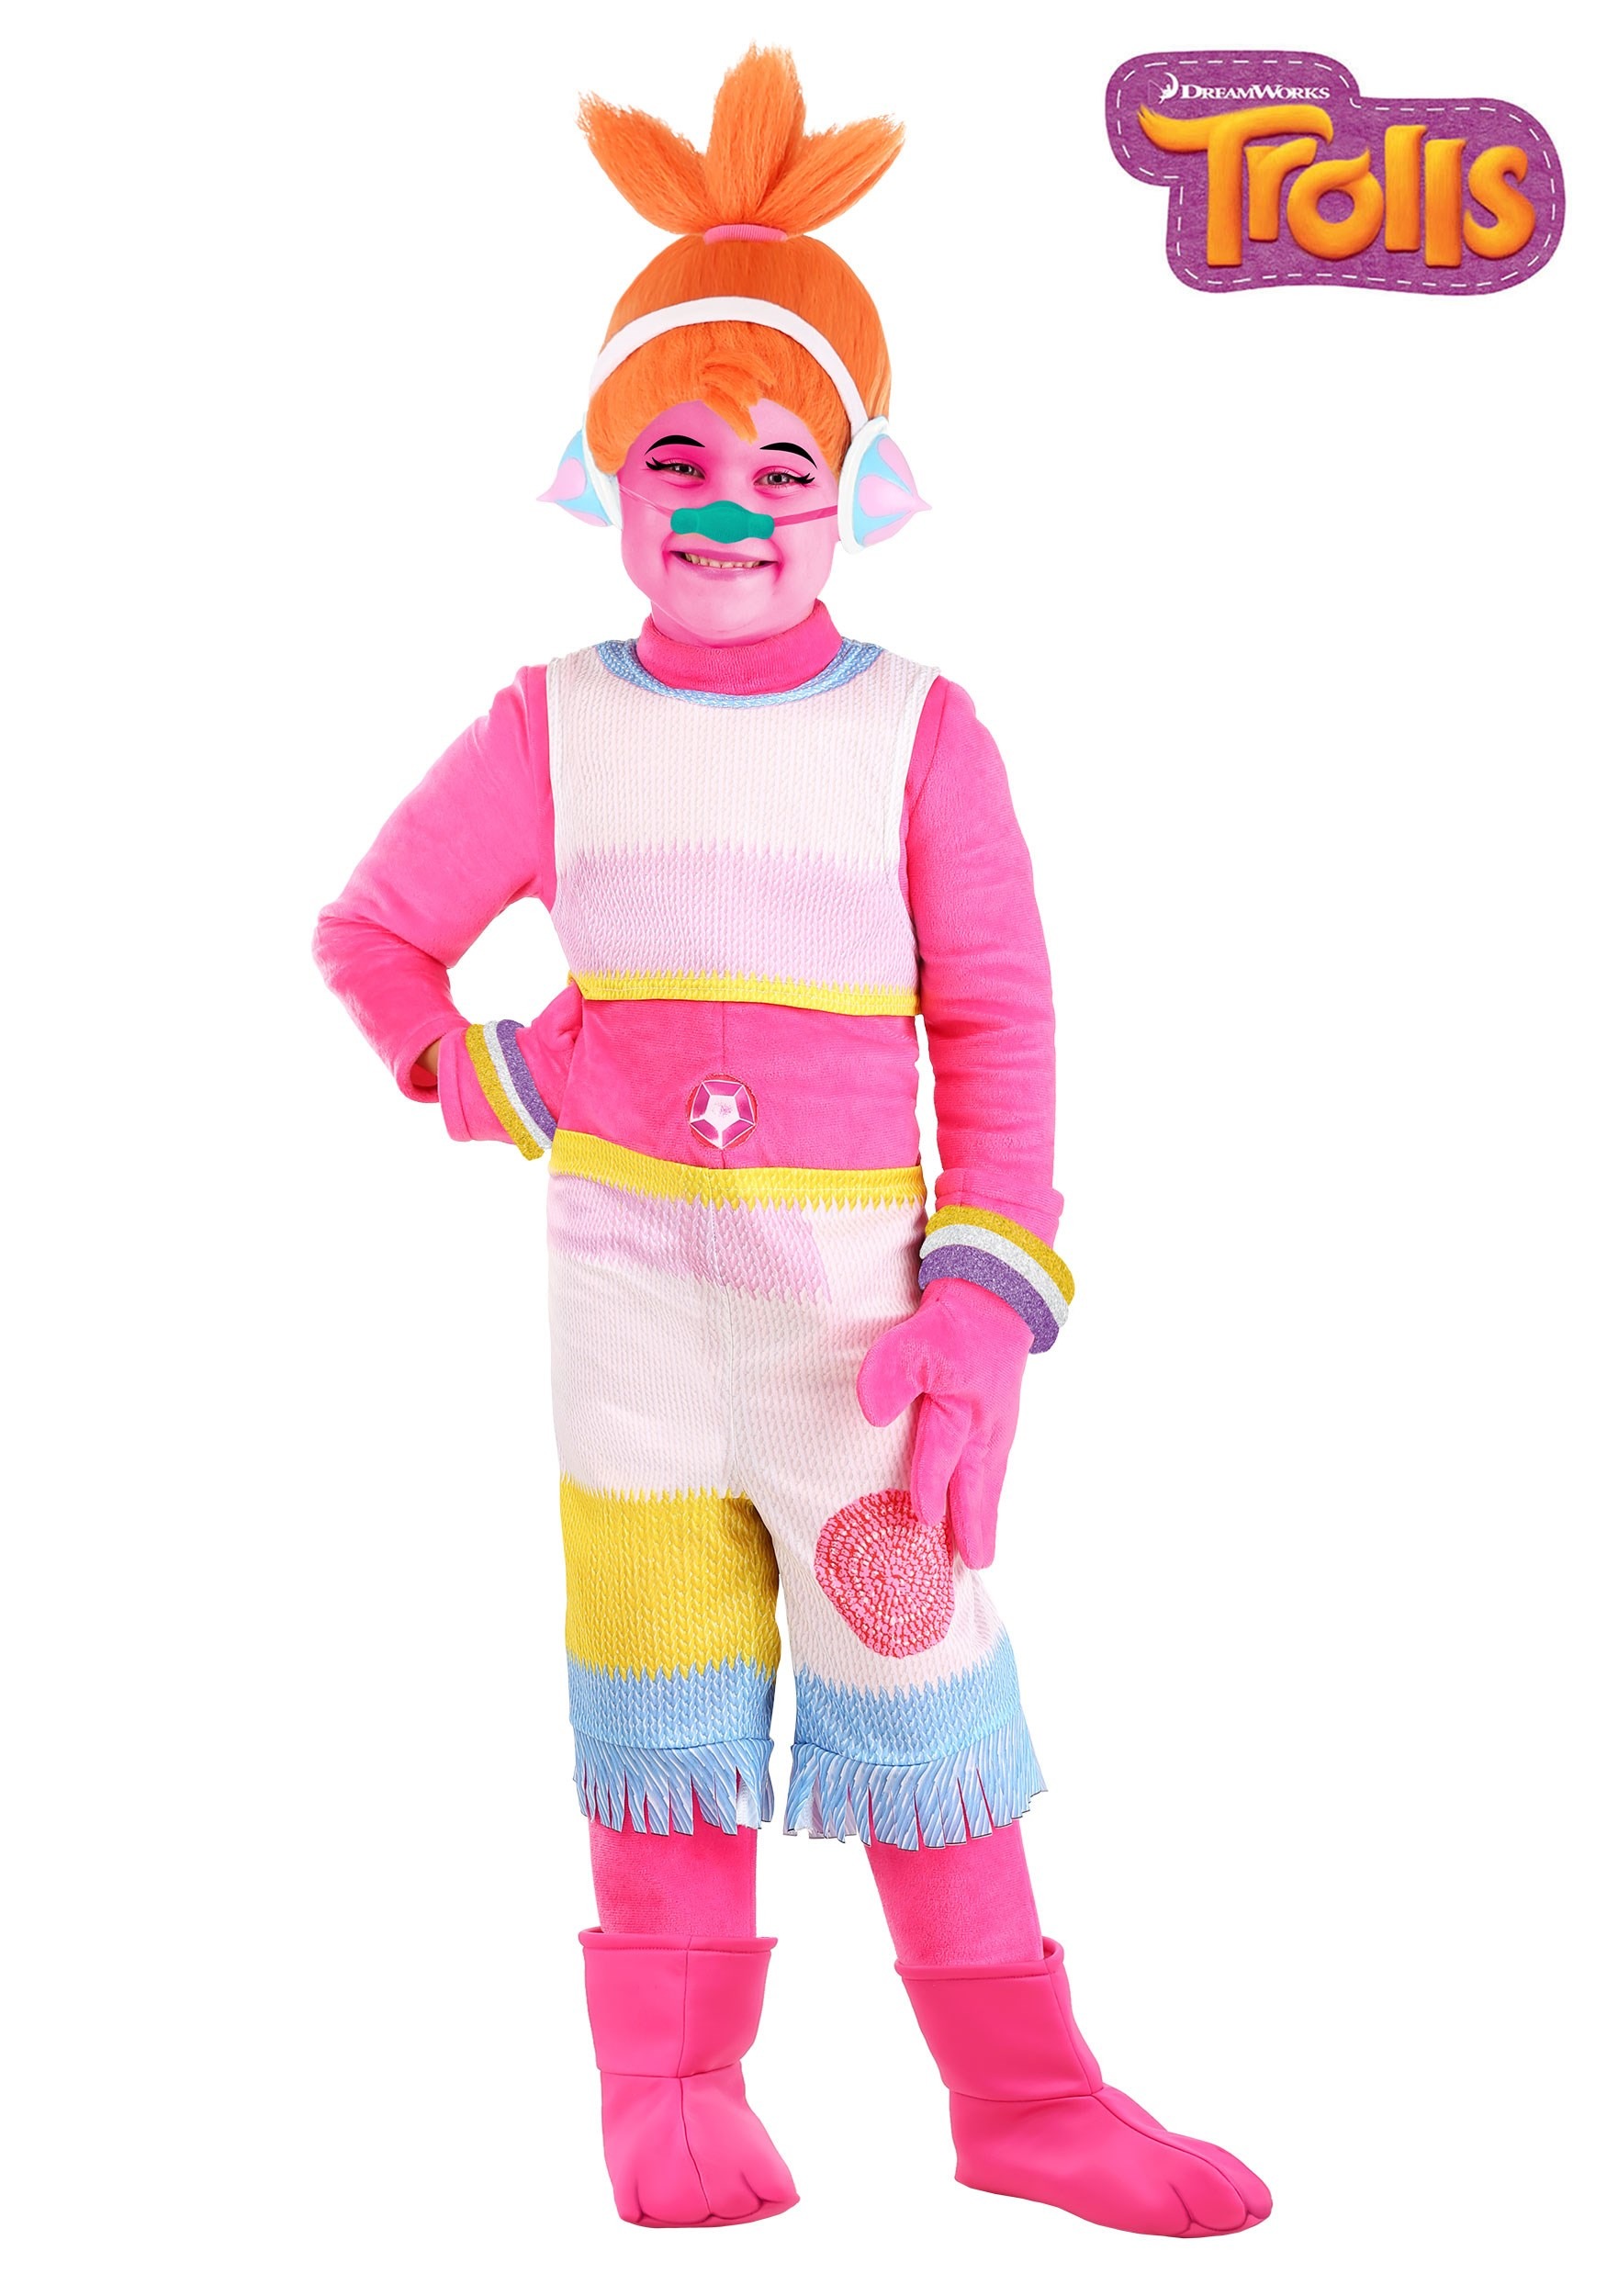 Trolls DJ Suki Costume for Toddlers